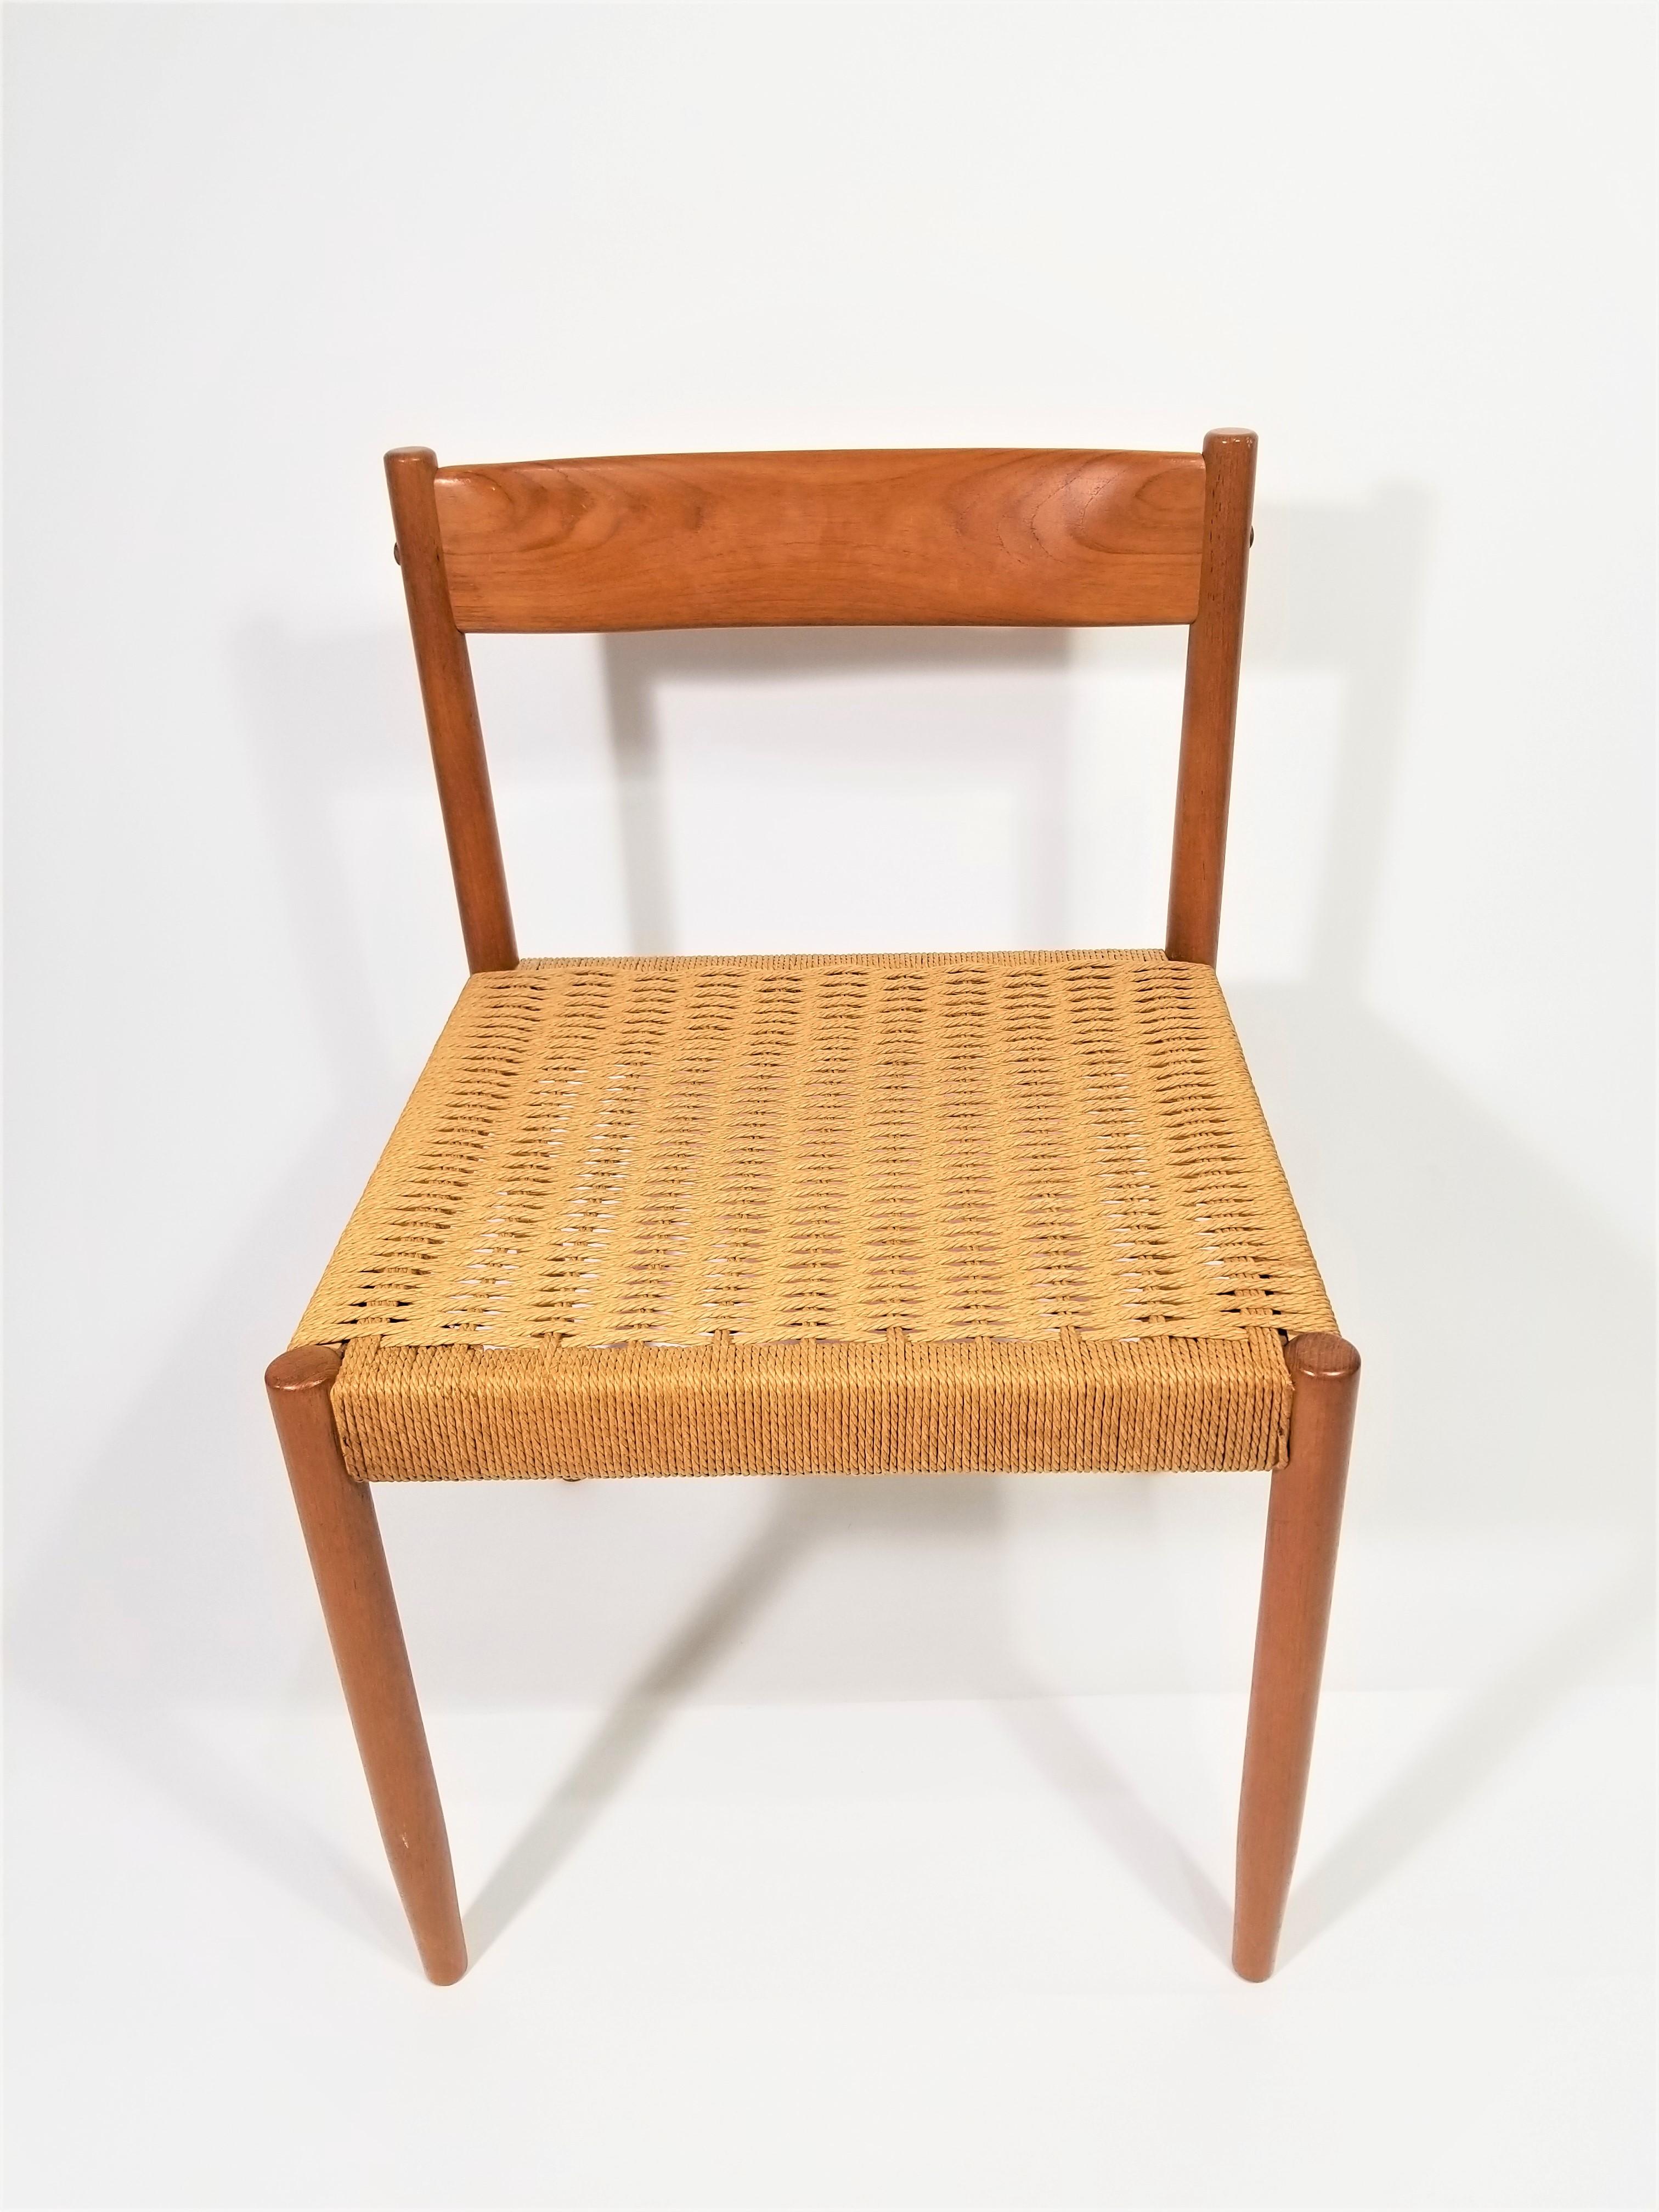 20th Century Poul Volther for Frem Rojle Danish Teak Woven Chair Midcentury 1960s  For Sale